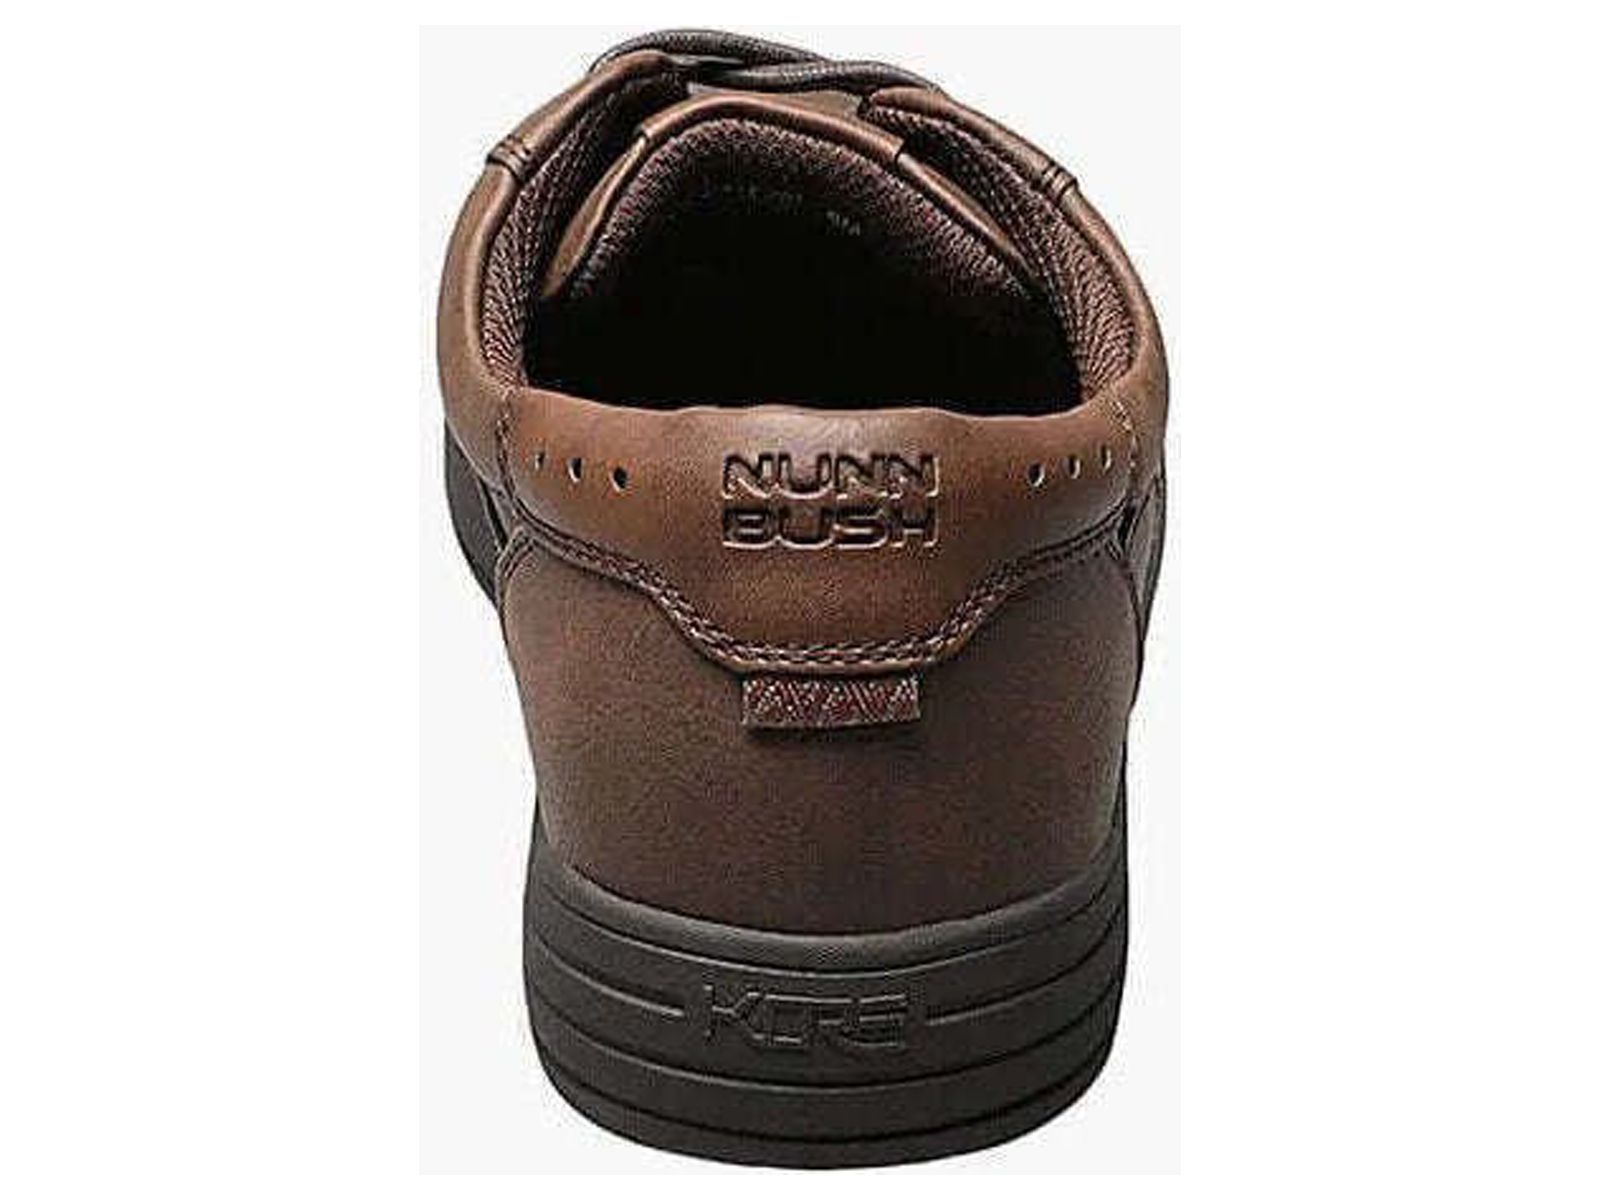 Nunn Bush KORE City Walk Lace To Toe Oxford Walking Sneaker Dark Brown 84819-201 - image 2 of 9